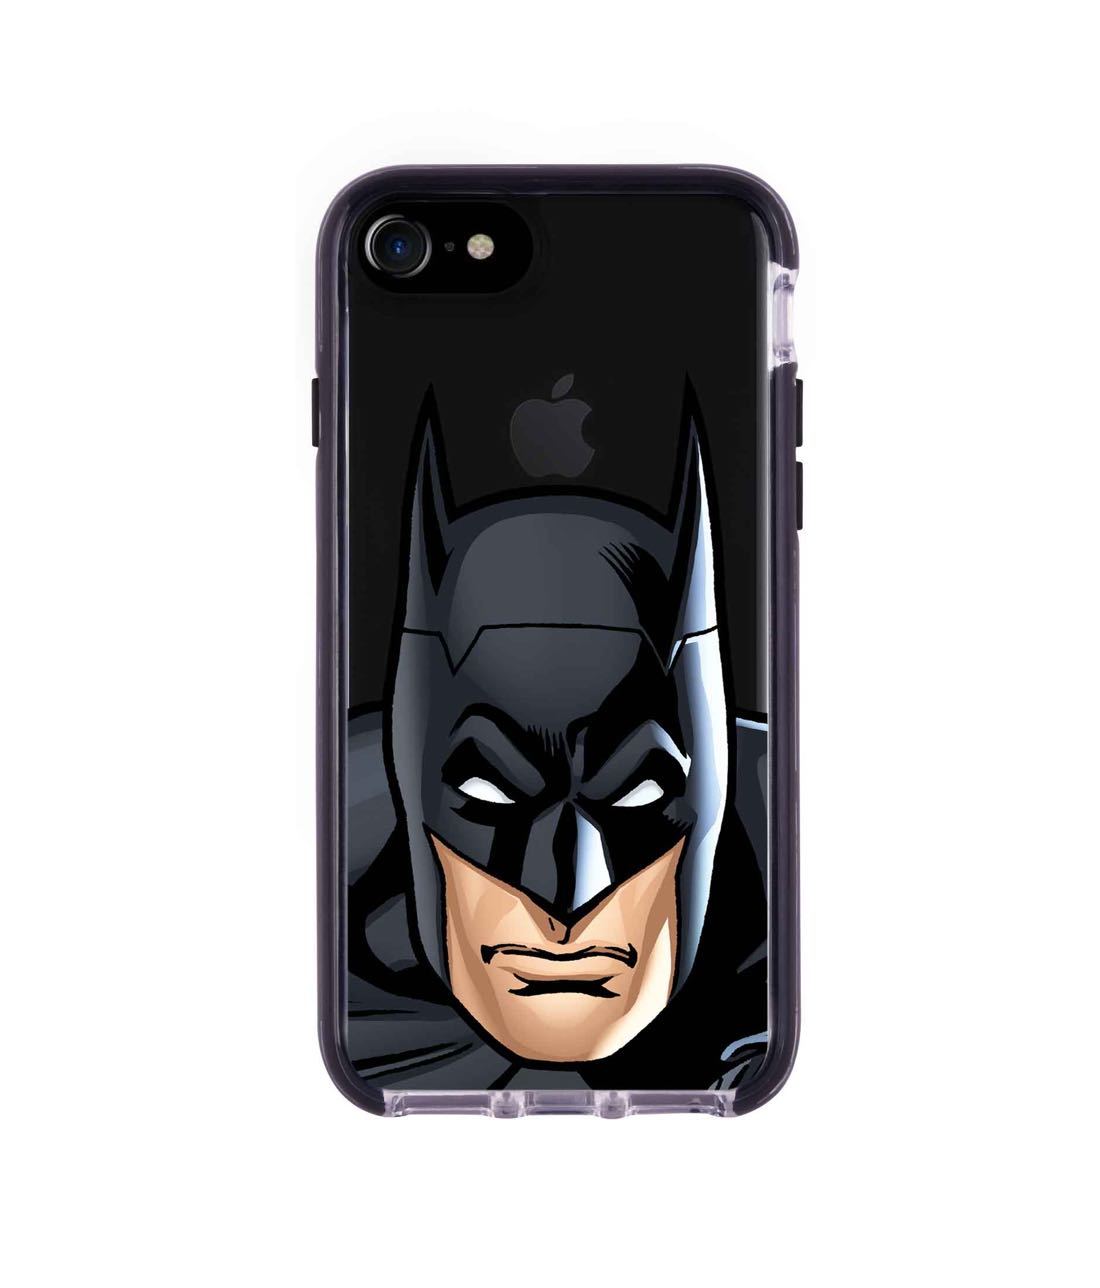 Fierce Batman - Extreme Phone Case for iPhone 7